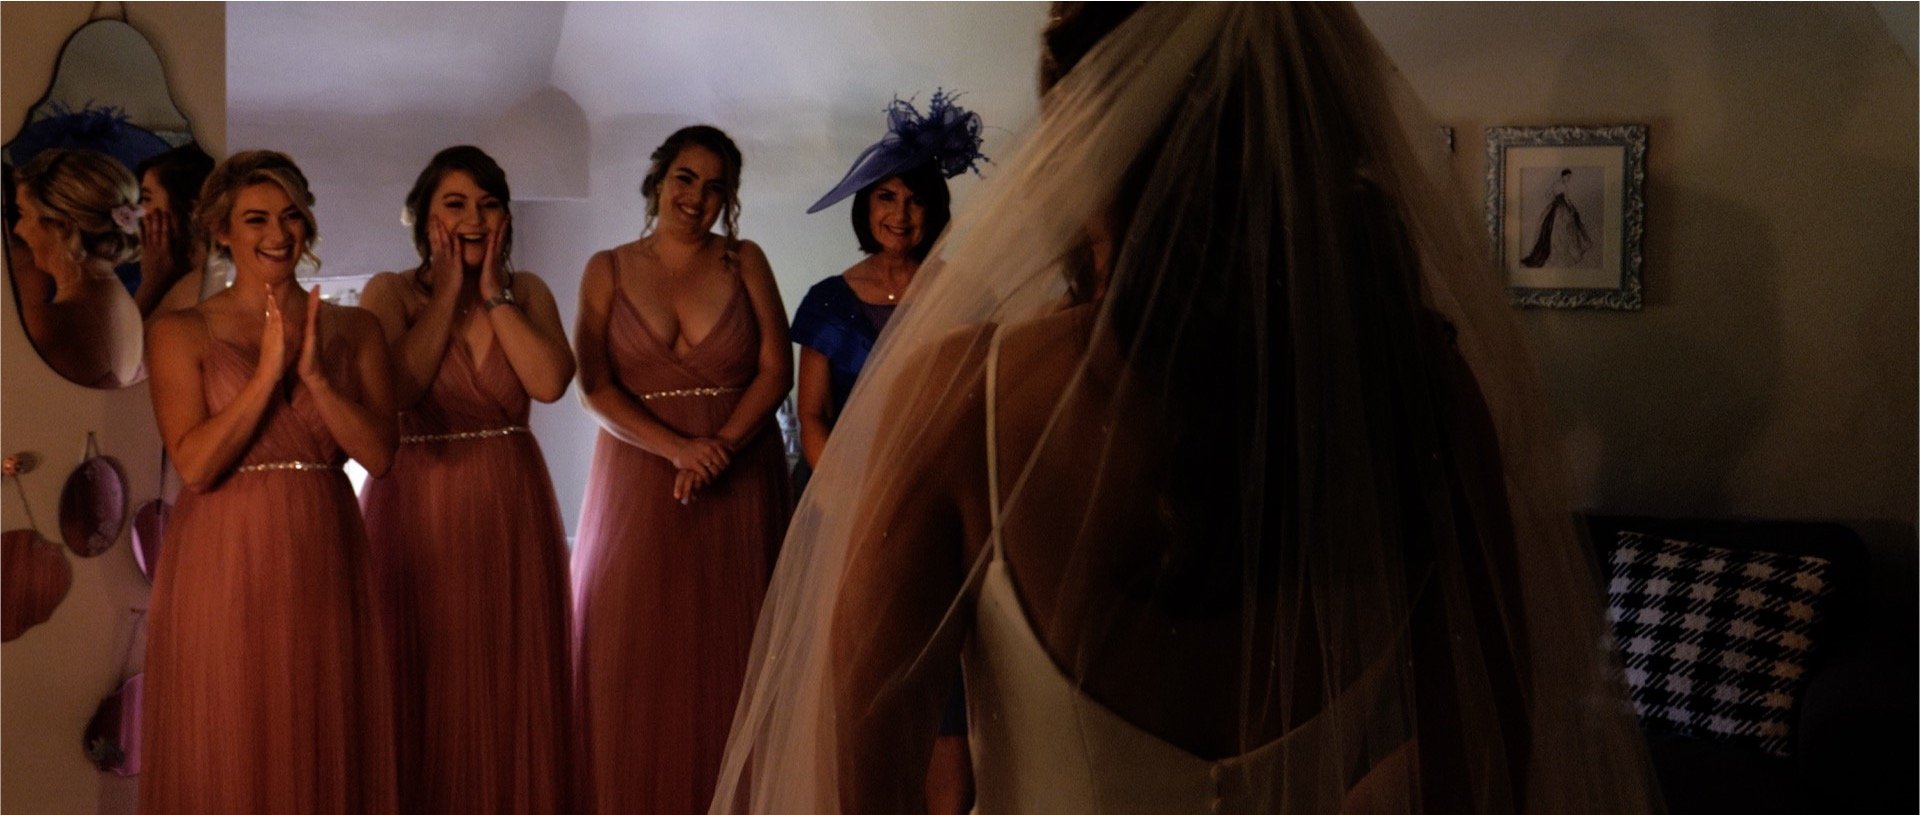 Wedding dress reactions video Essex wedding videography.jpg